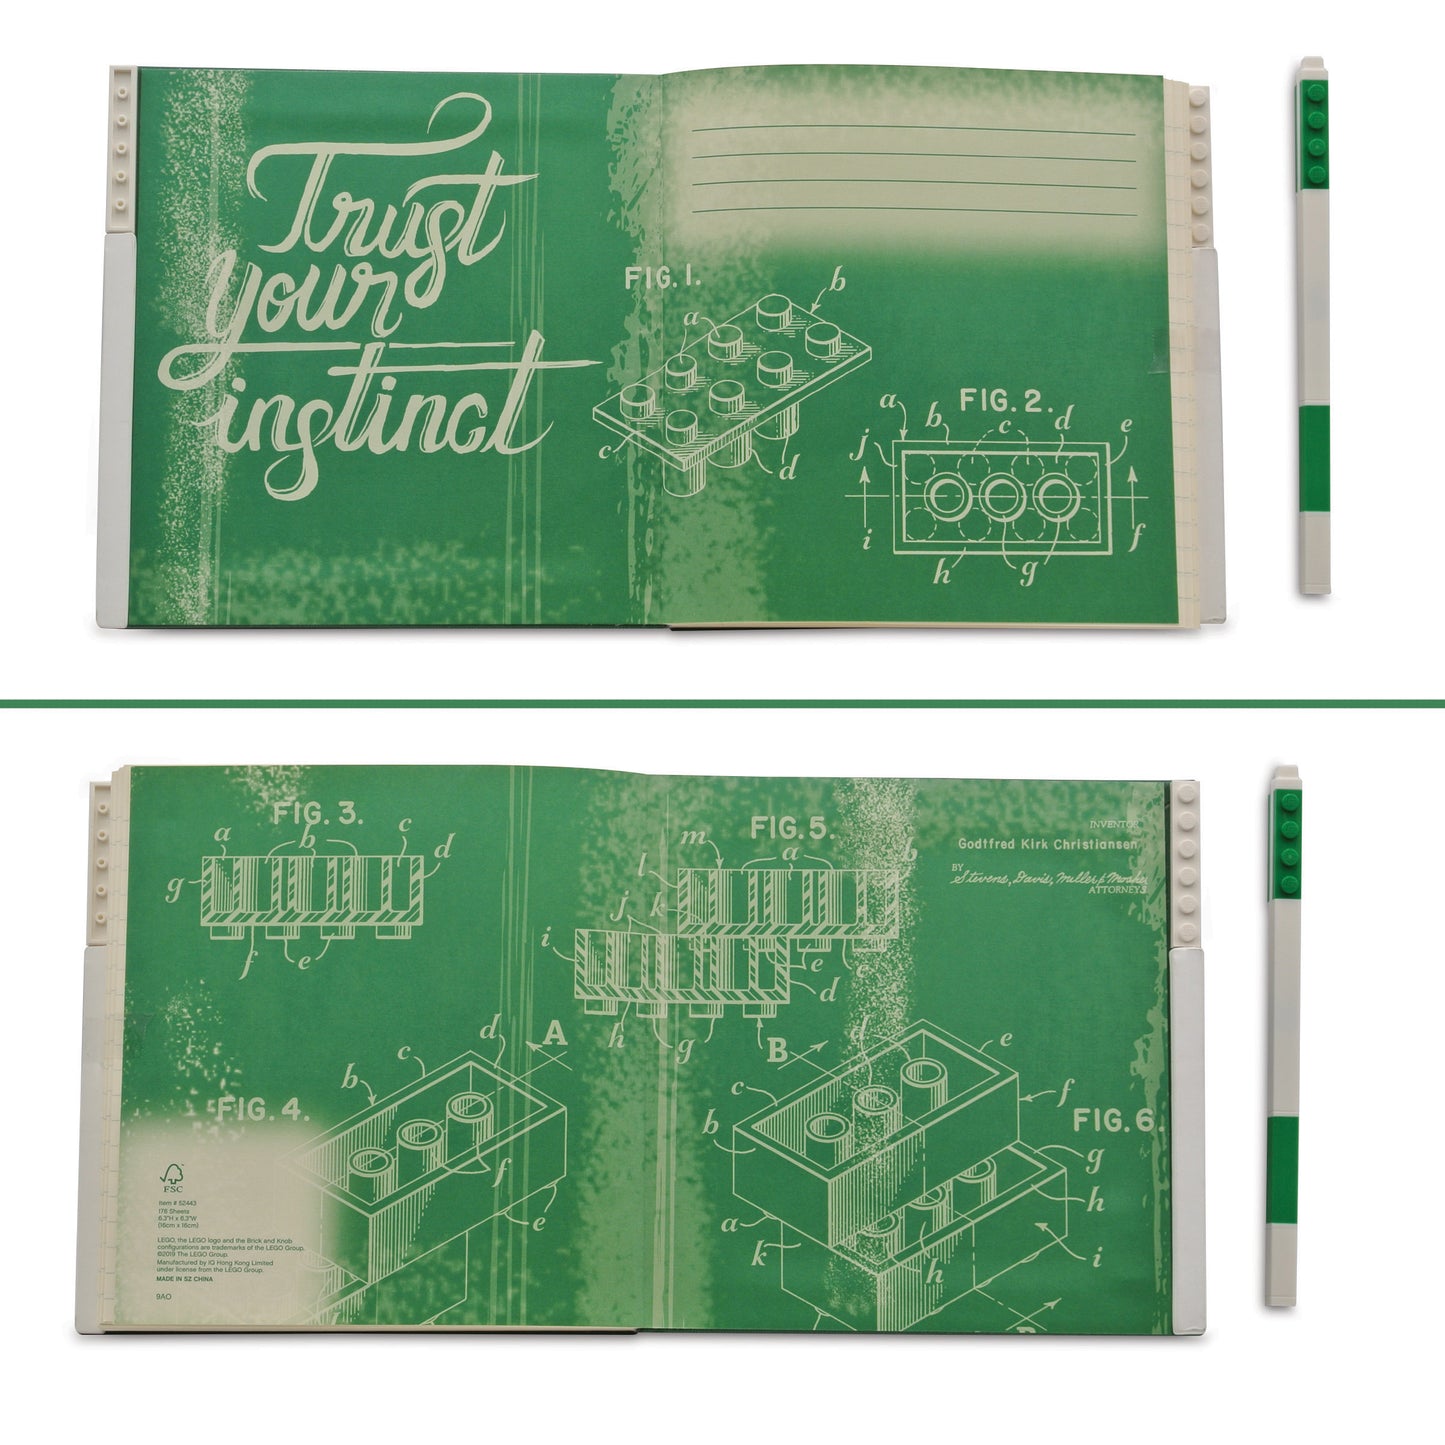 IQ レゴ 2.0シリーズ 文房具 ロッキングノート ジェルペン付き 緑 (52443)